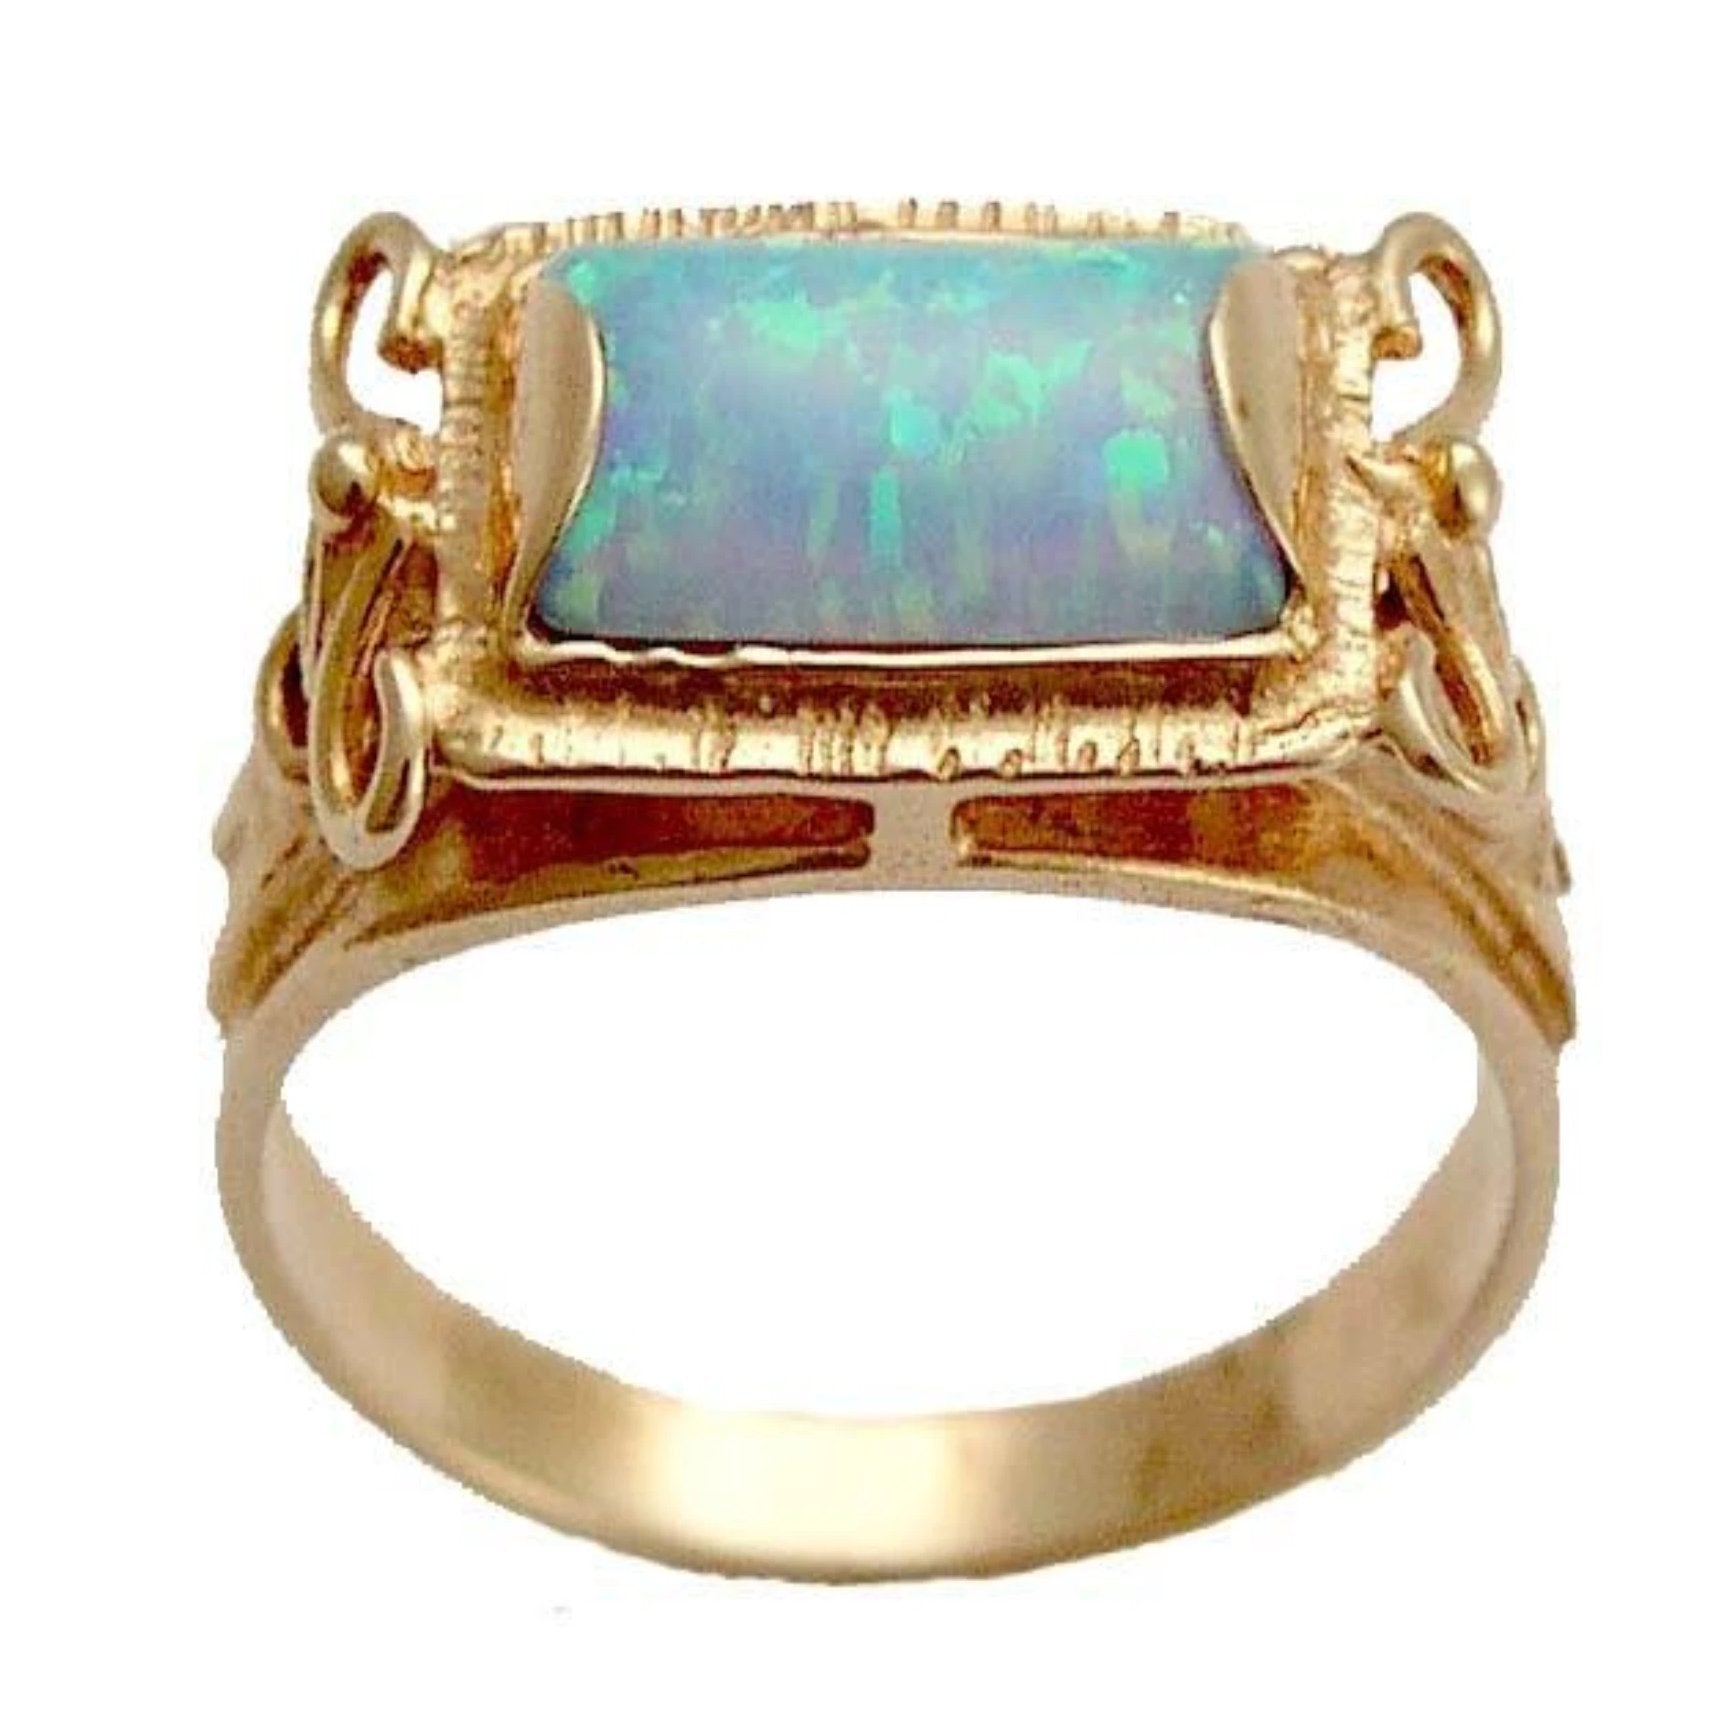 Blue opal rose gold ring